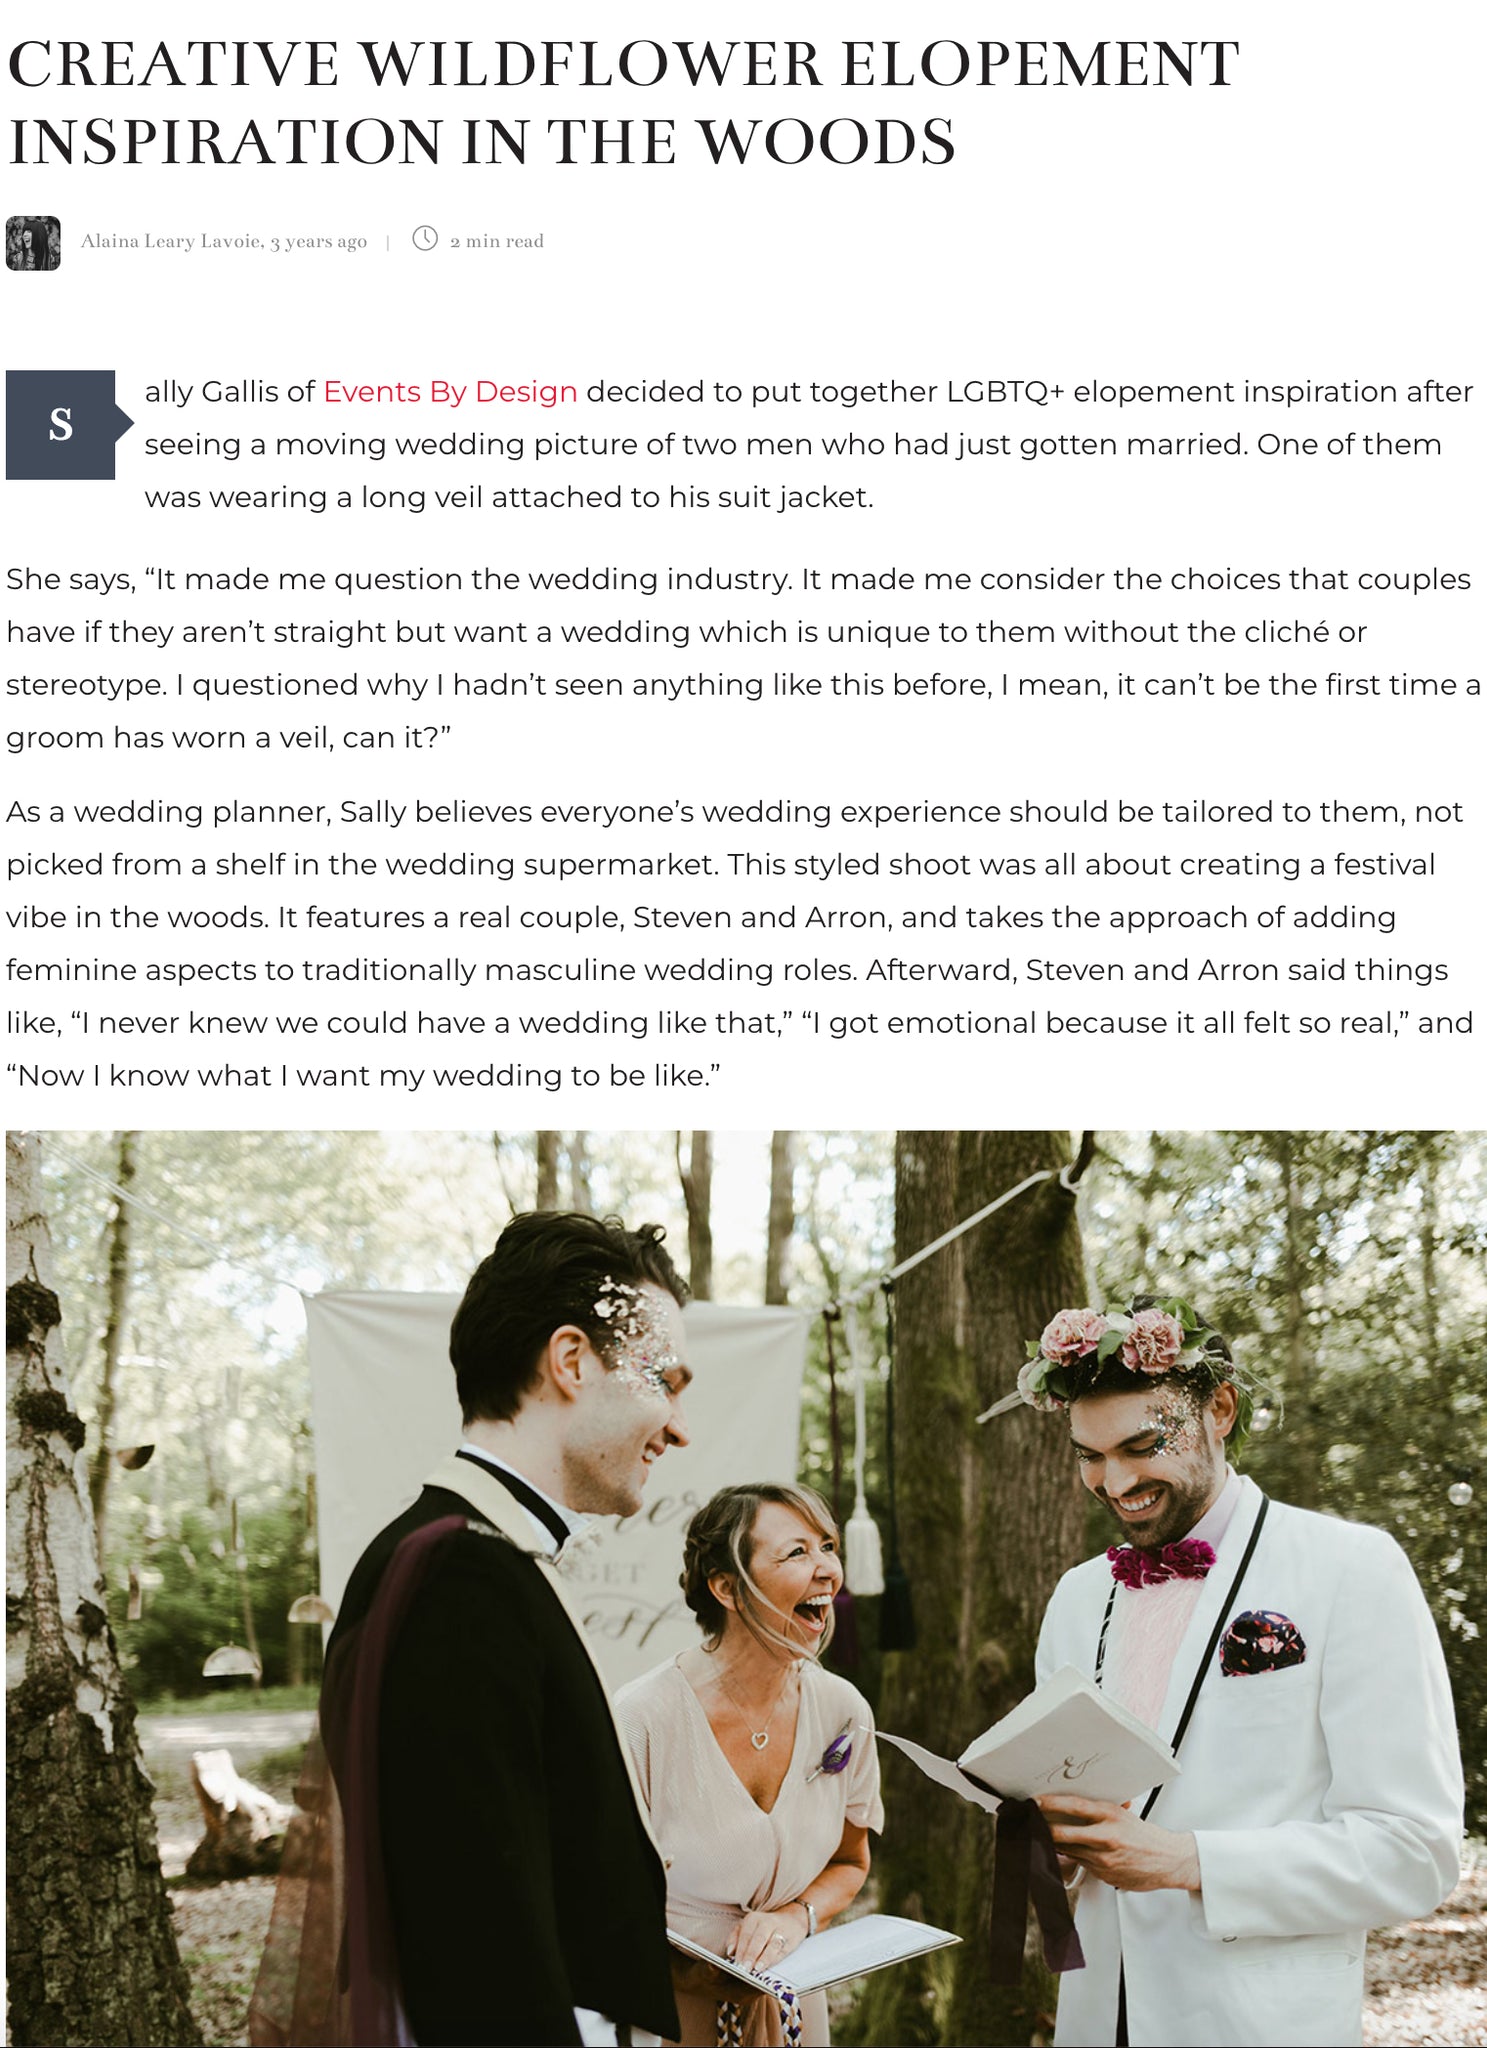 Wildflower elopement in the woods wedding ideas